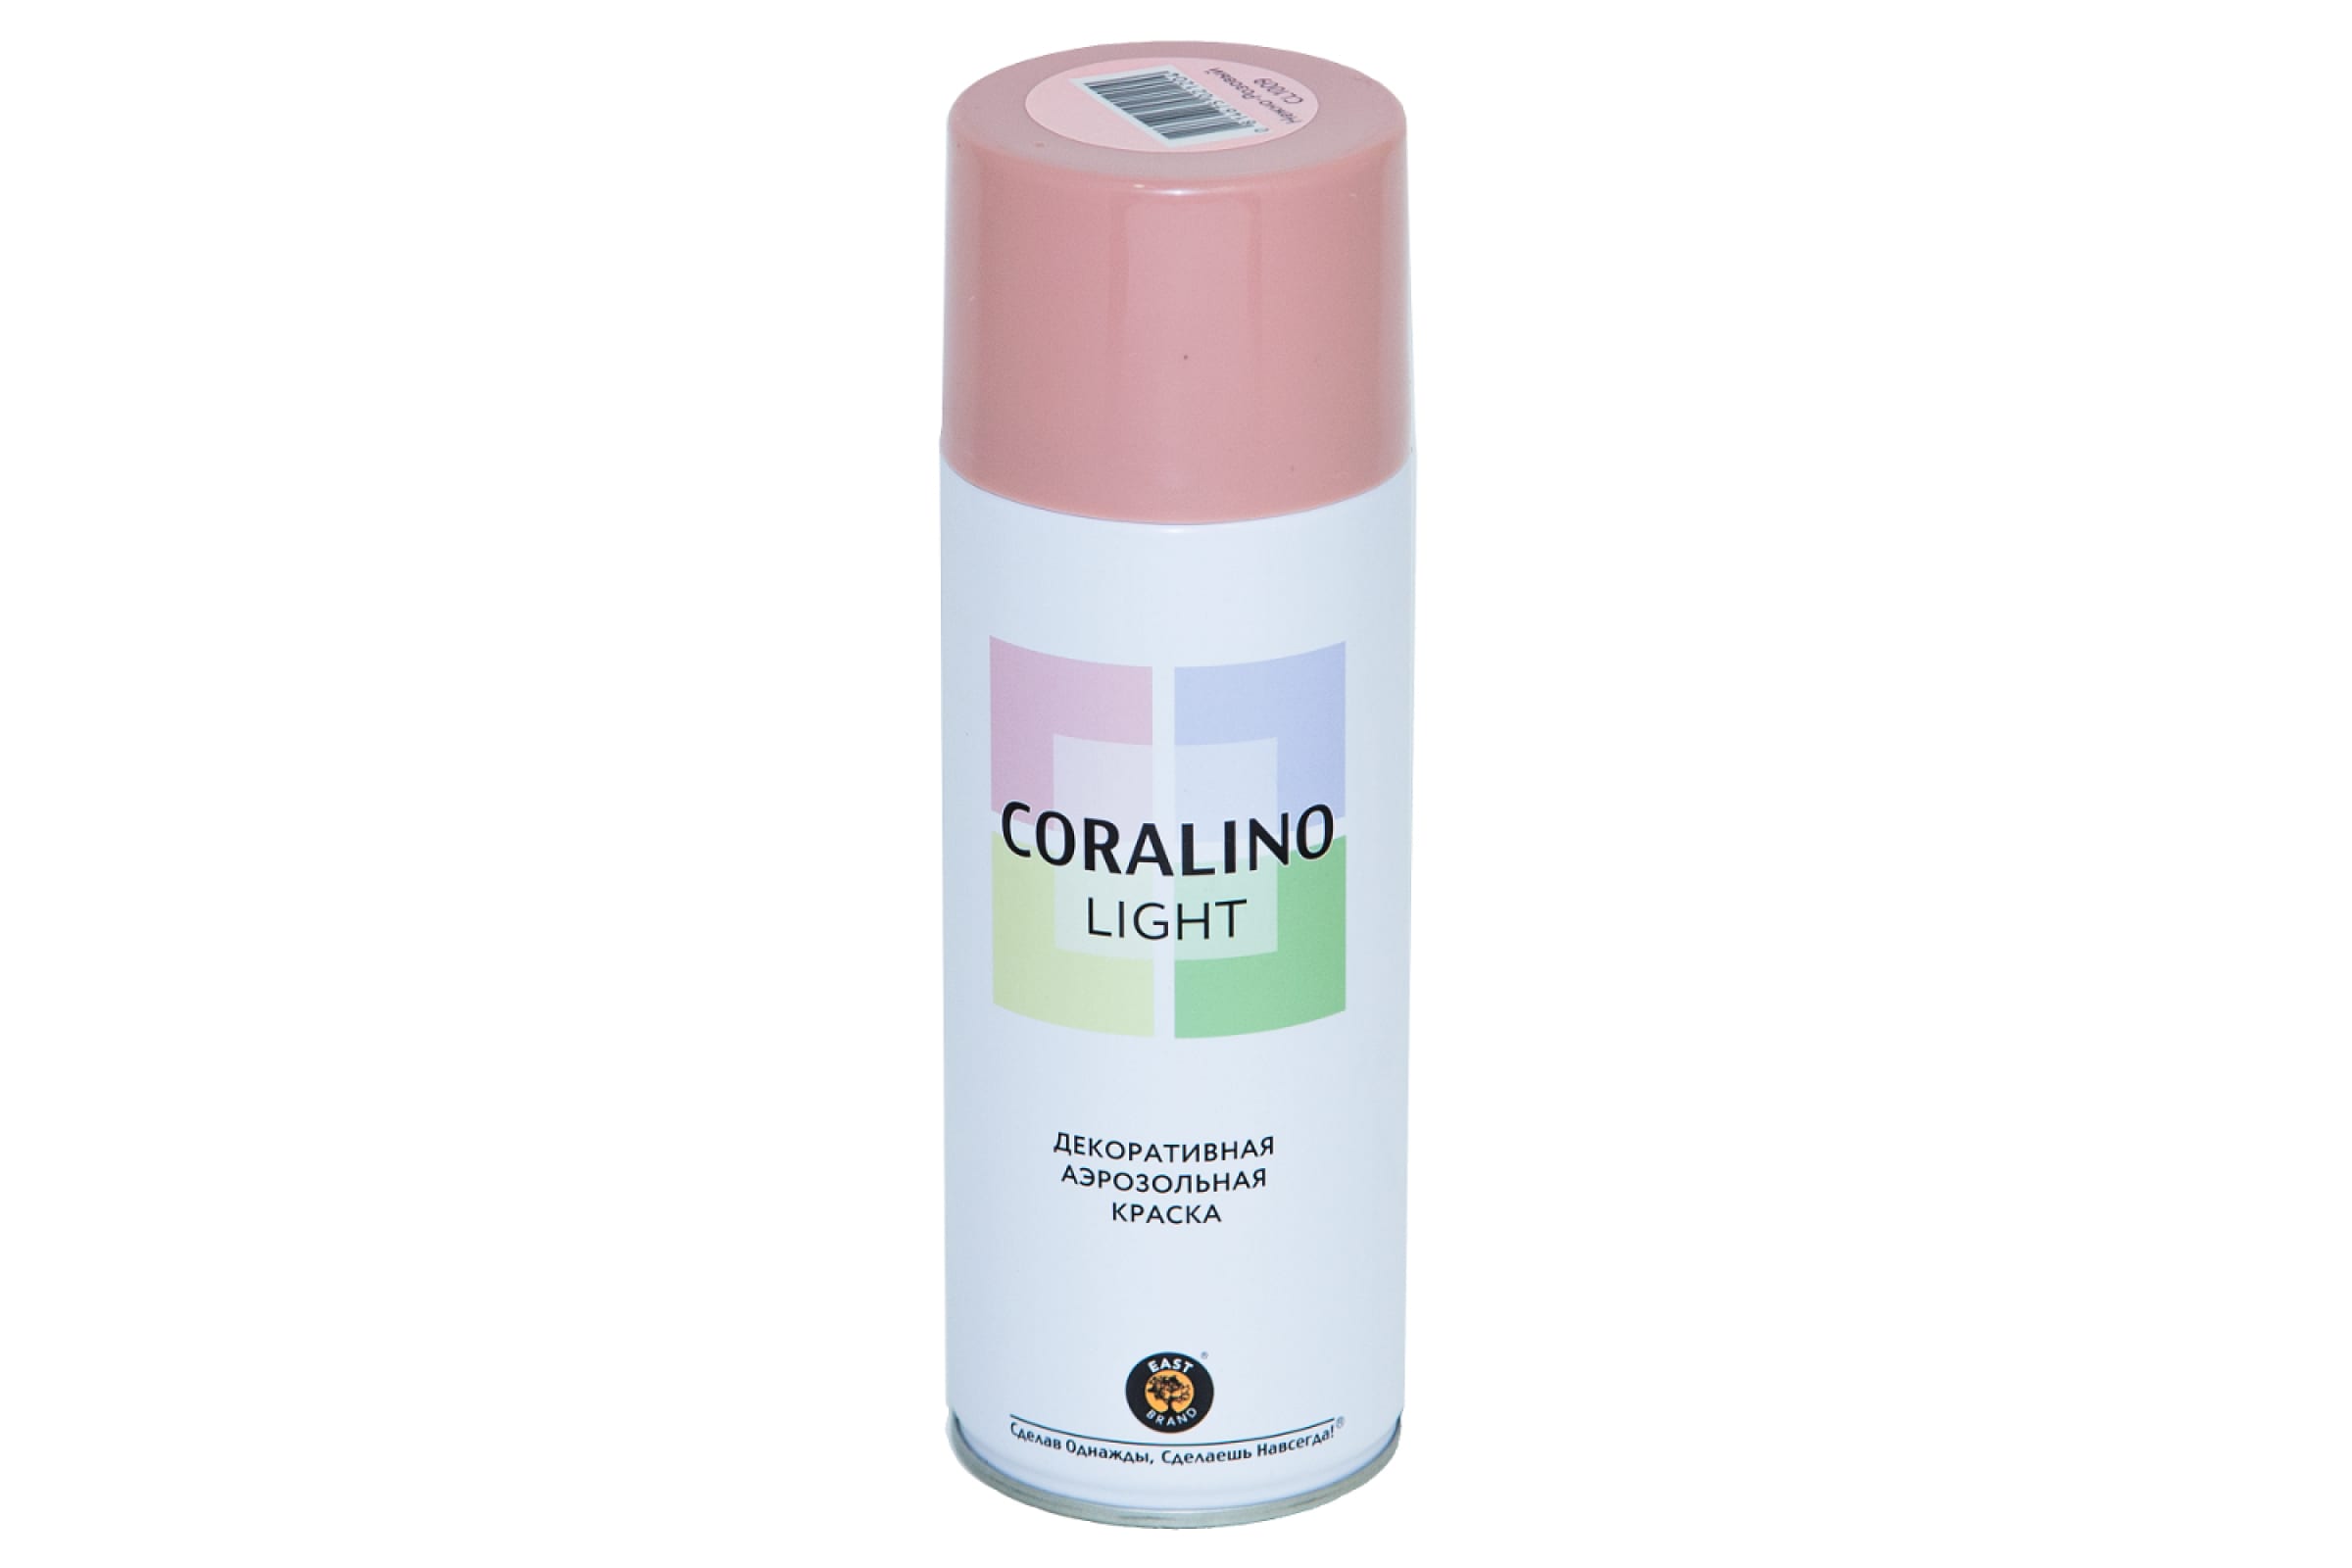 CORALINO LIGHT Краска аэроз. декоративная , Нежно розовый CL1009 органайзер для декора 7 блоков 4 ячейки 17 5 × 10 5 × 2 5 см нежно розовый